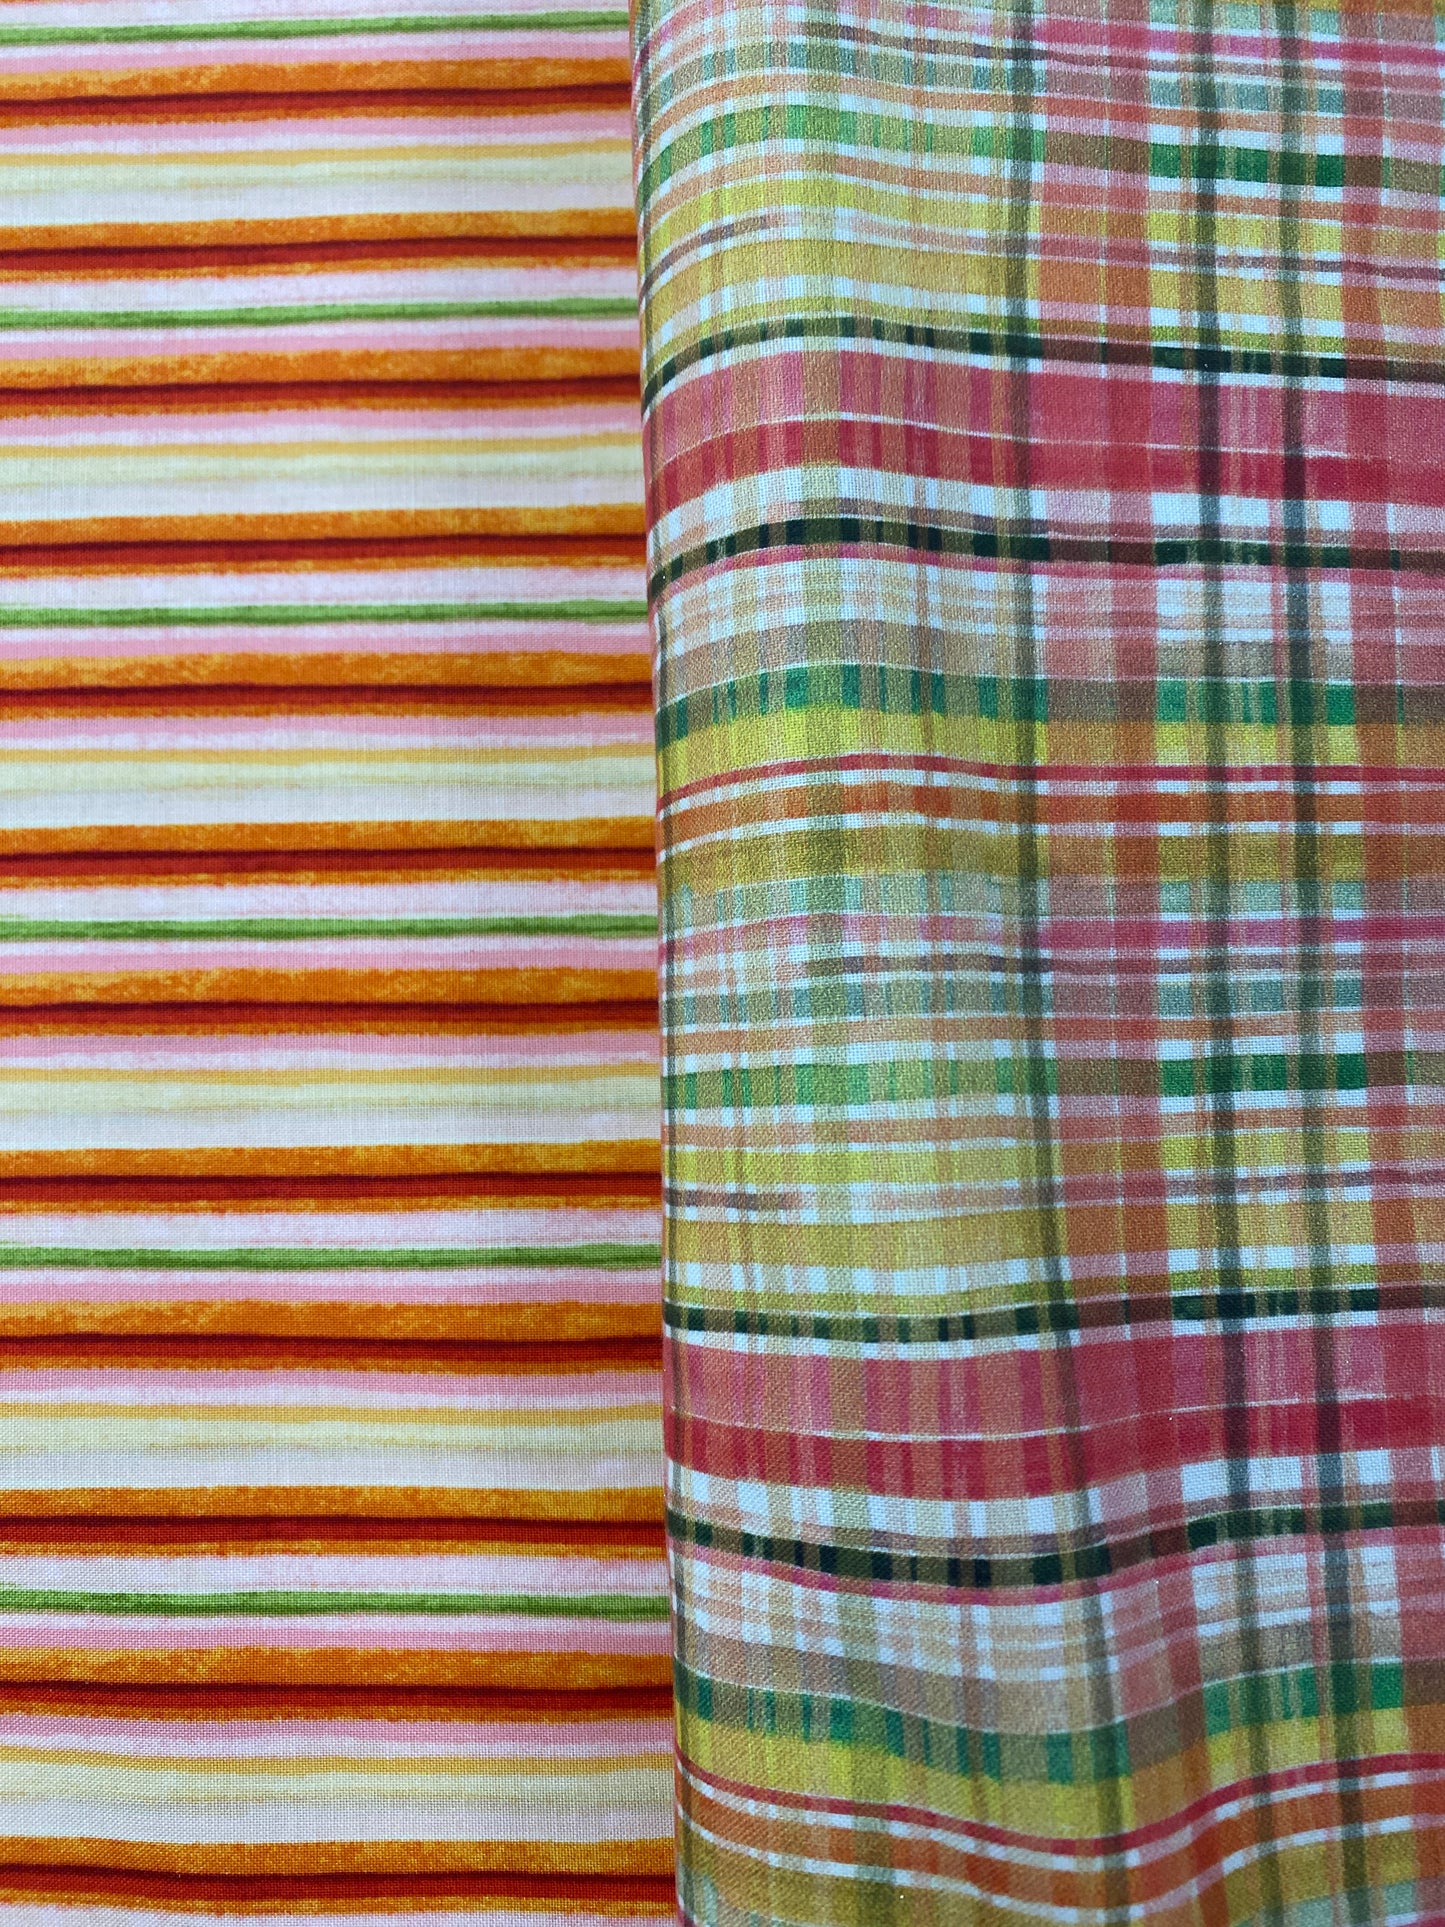 Rainbow Fabric